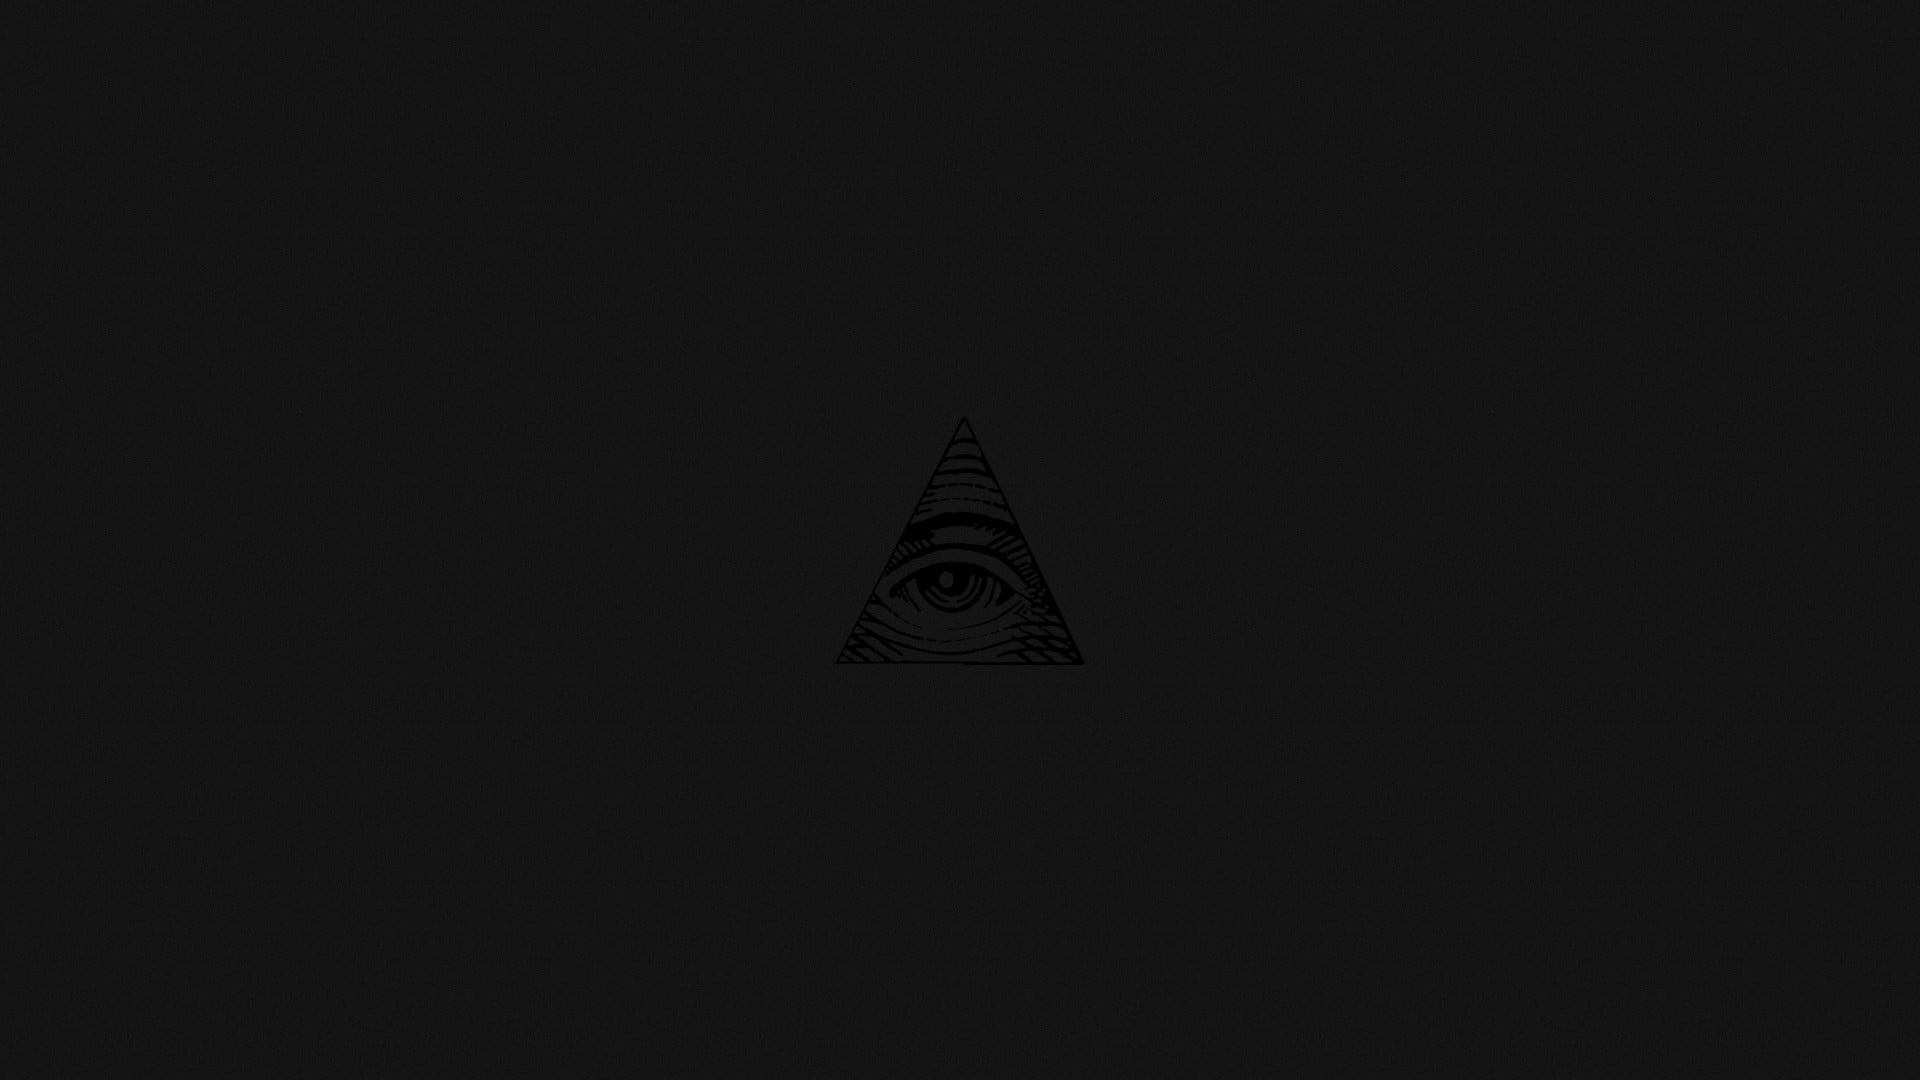 eye of ra logo, the all seeing eye, minimalism, black background